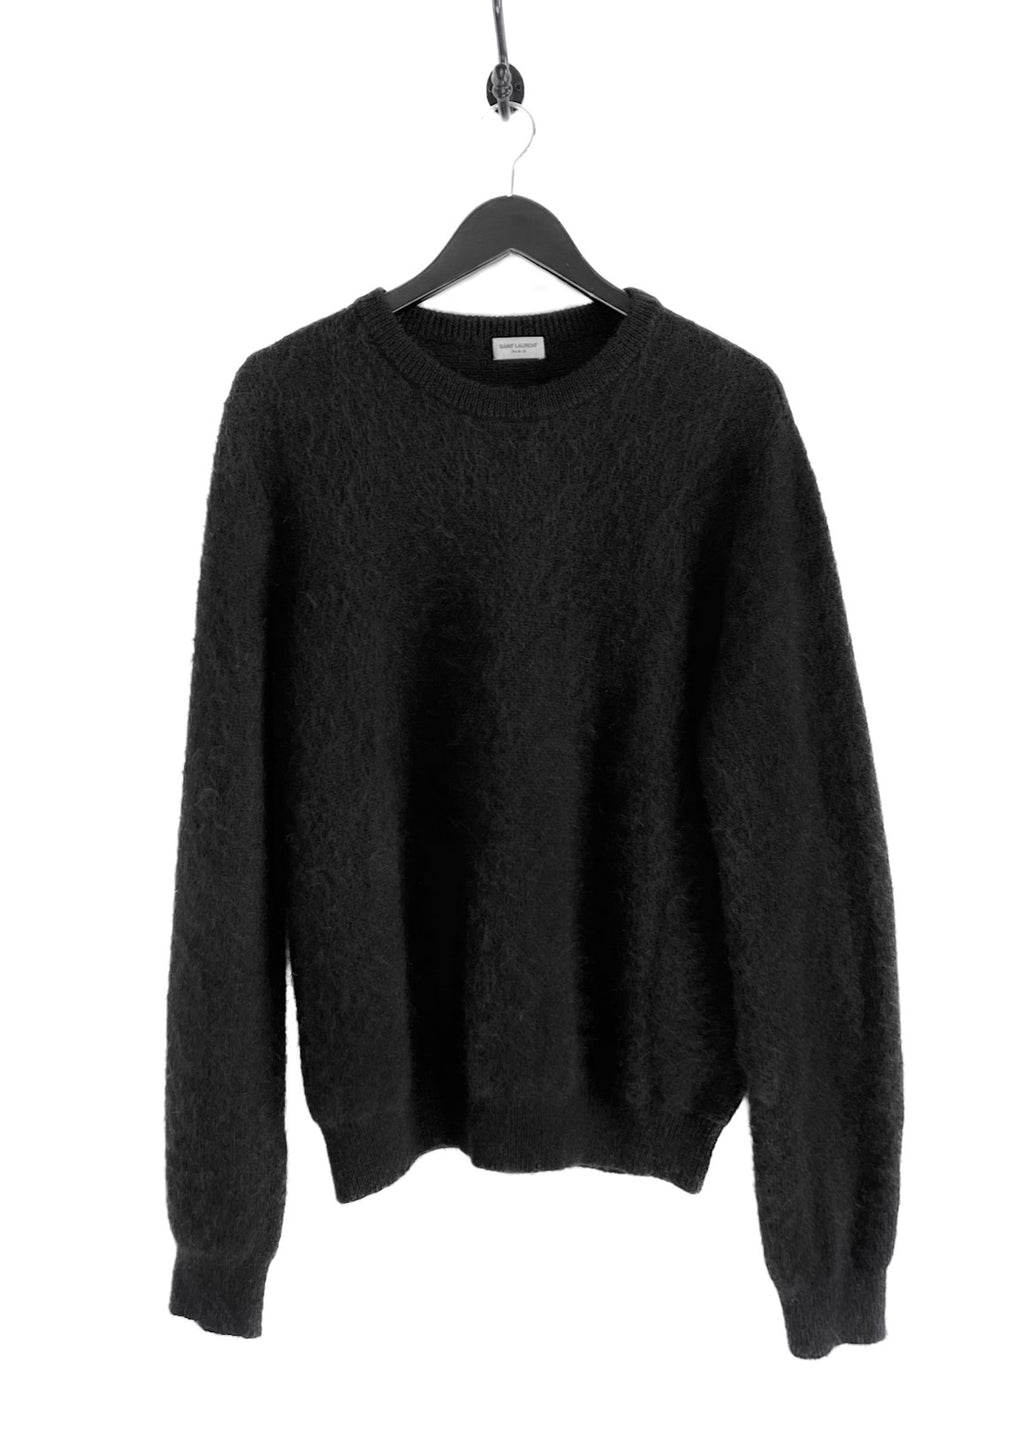 Saint Laurent Hedi Slimane 2014 Black Mohair Blend Knit Sweater